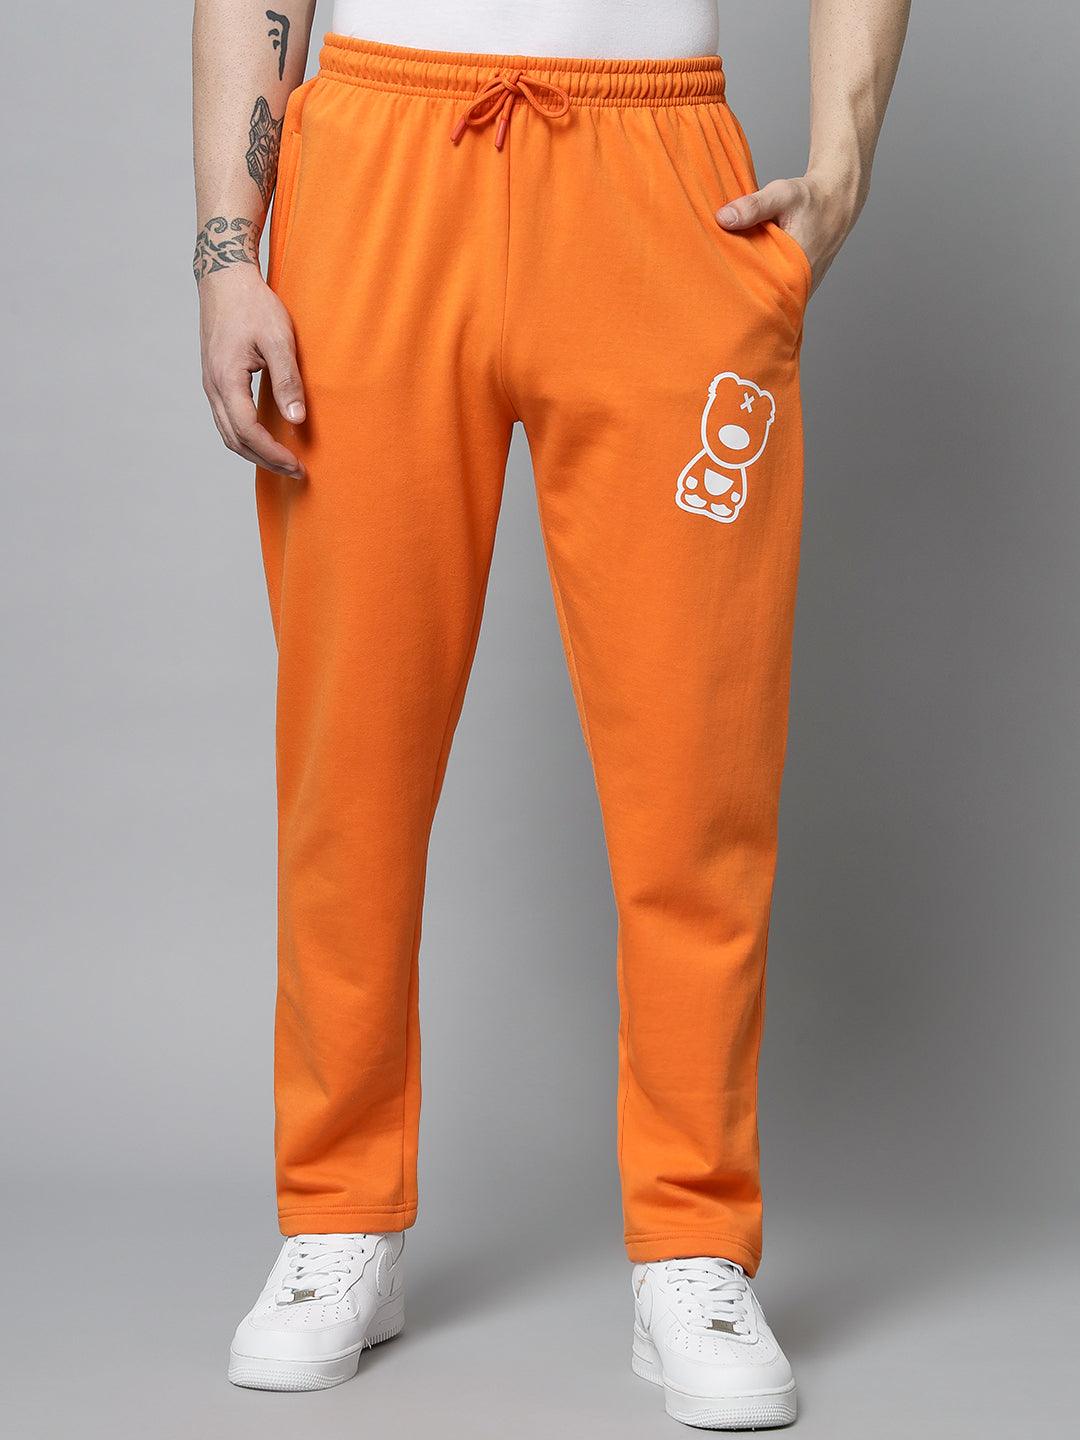 Griffel Men's Front Logo Print Fleece Zipper and Jogger Full set Orange Tracksuit - griffel